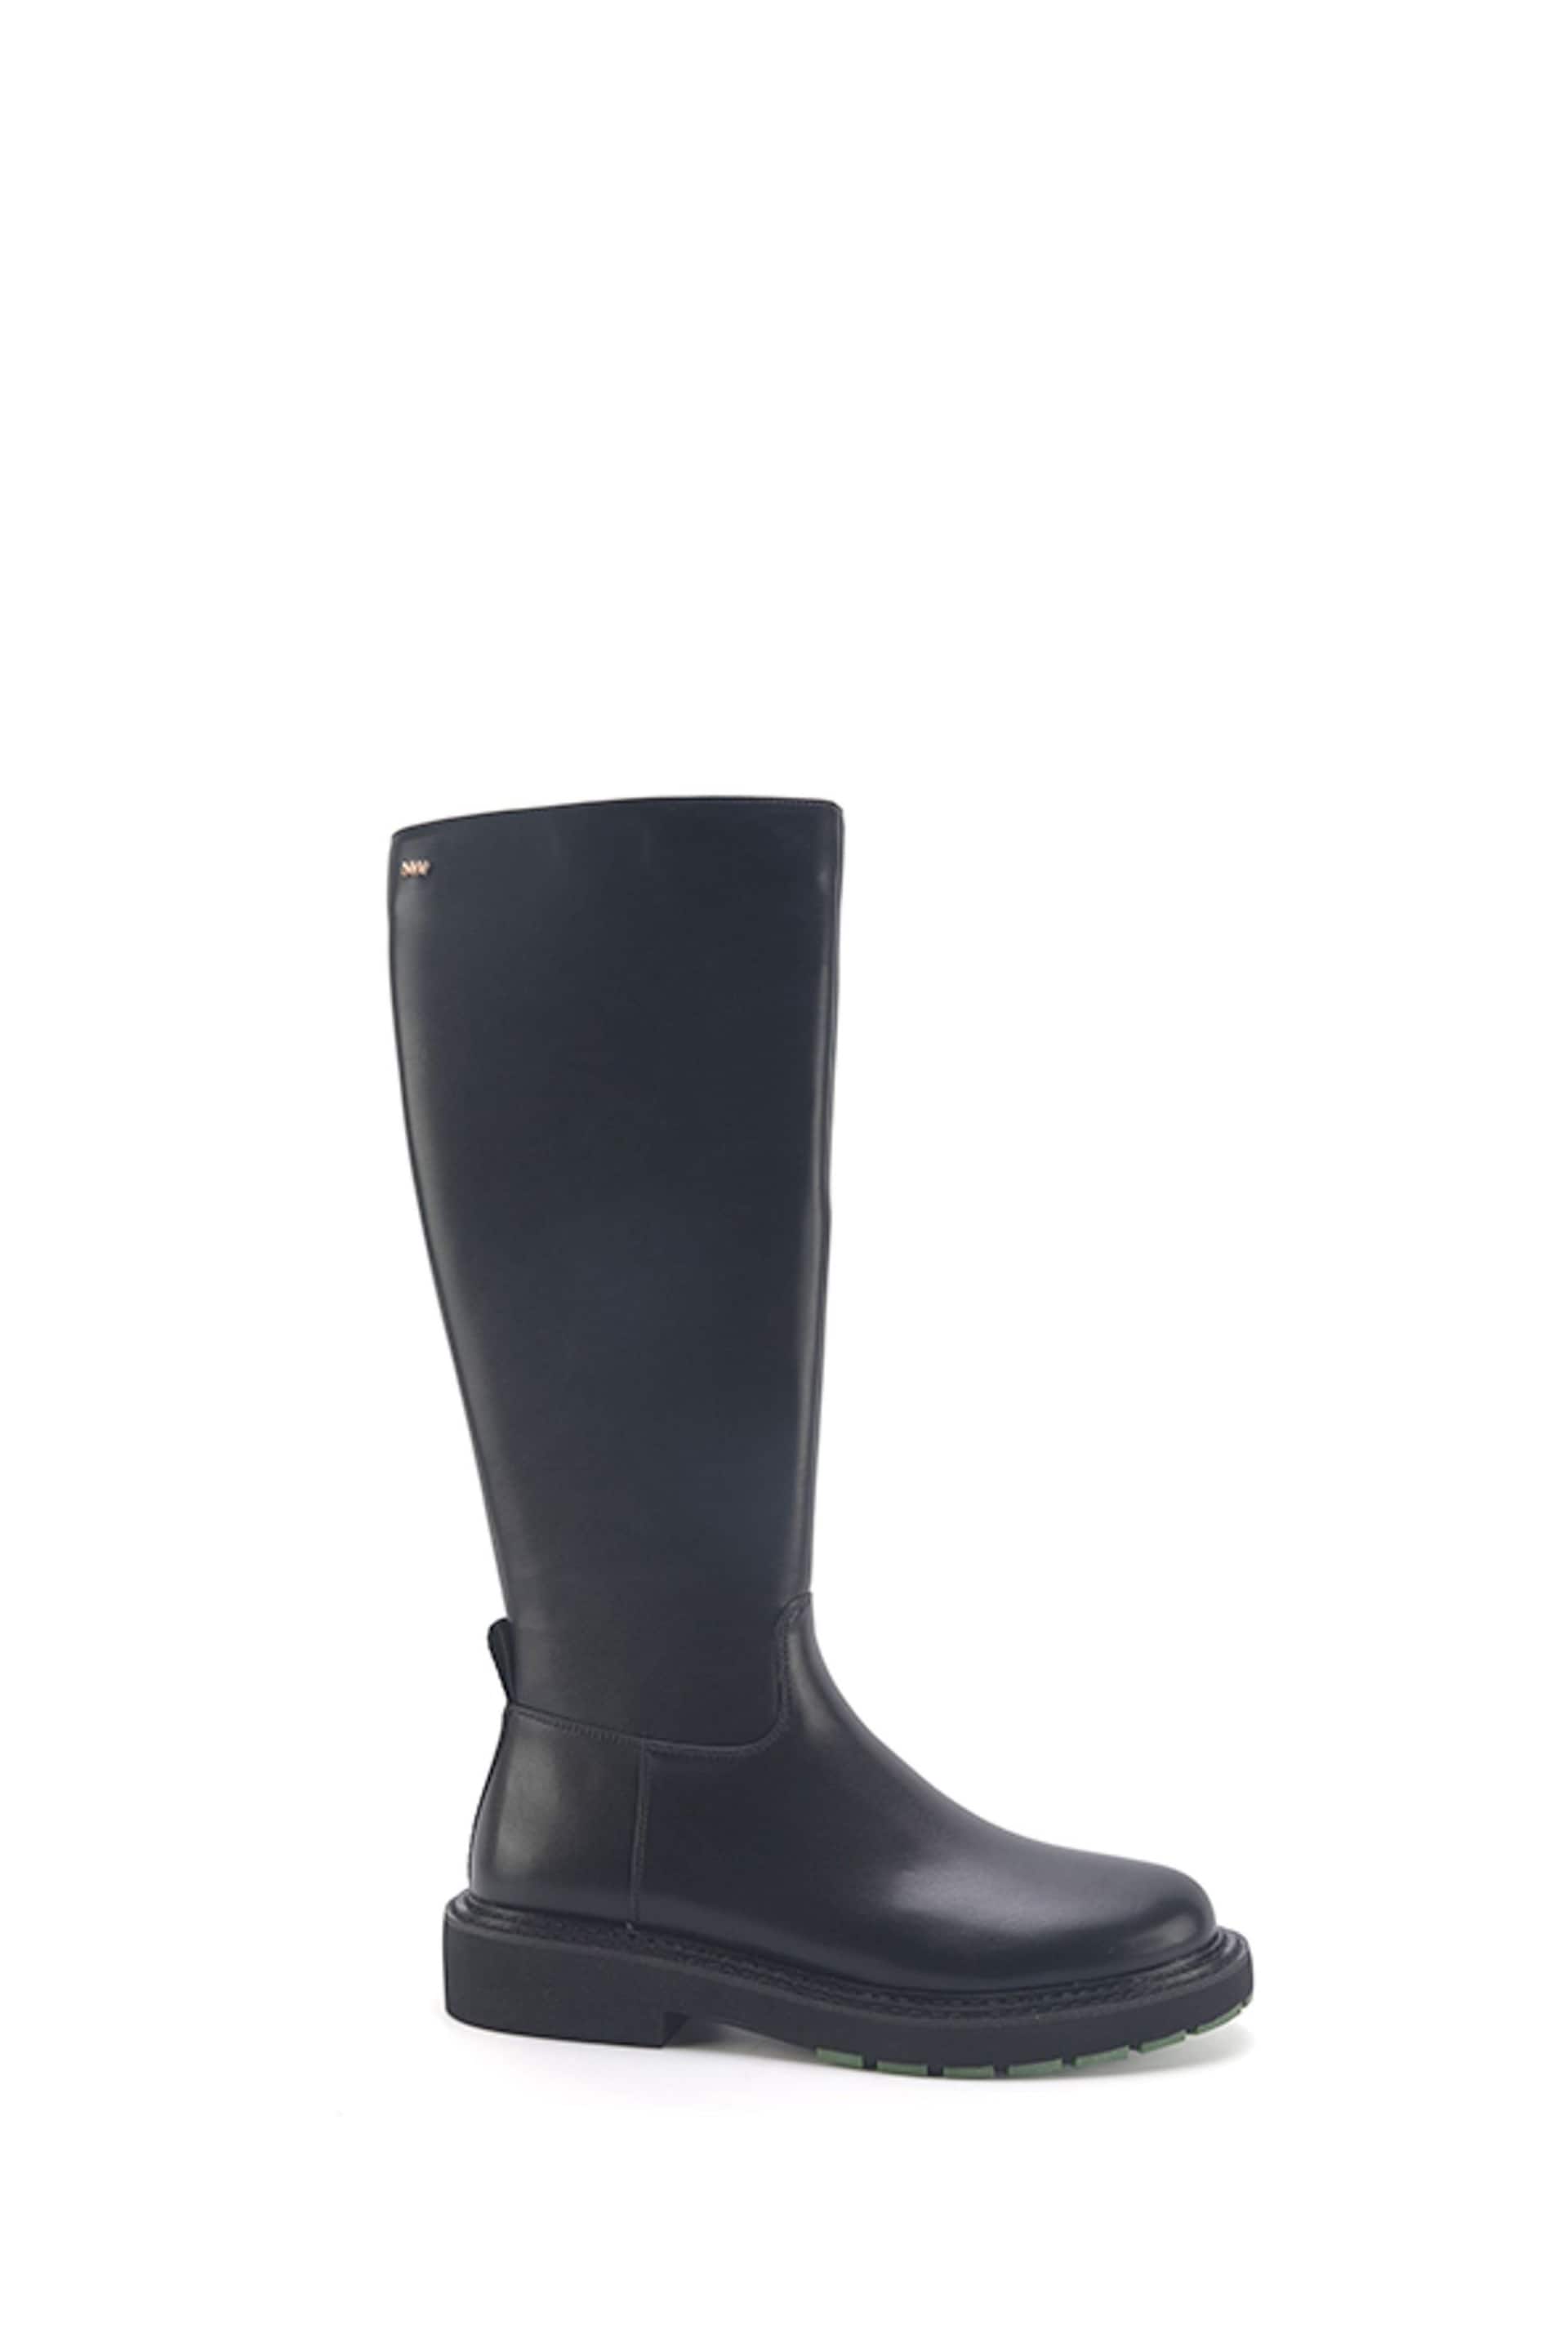 Nine West Womens 'Dautsen' Knee High Flat Black Boots with Zipper - Image 1 of 2